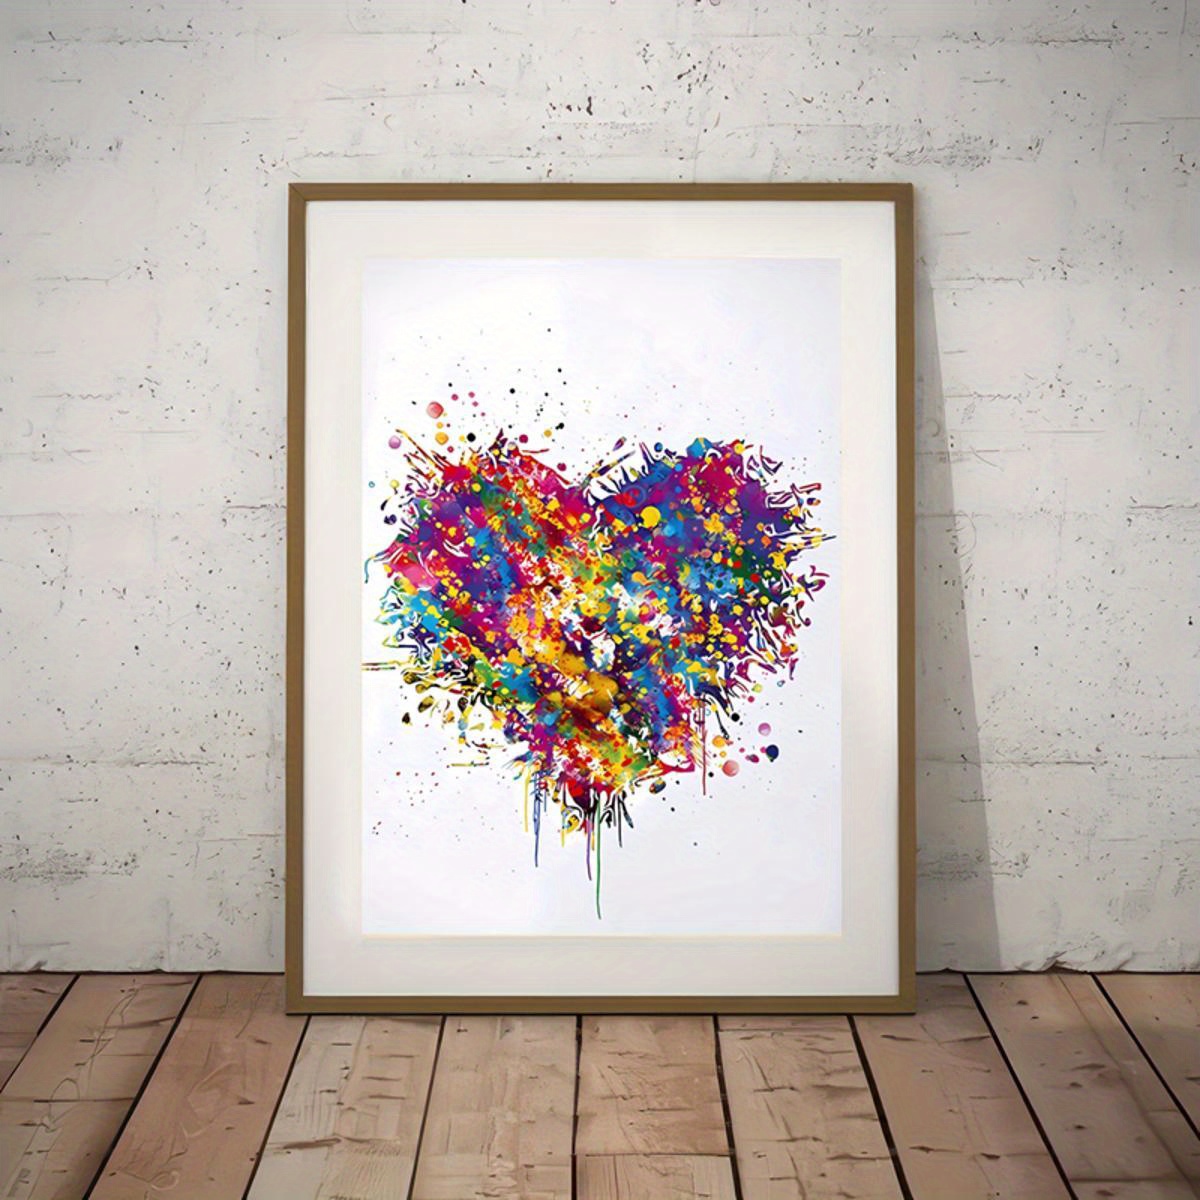 Abstract Heart Canvas Wall Decor